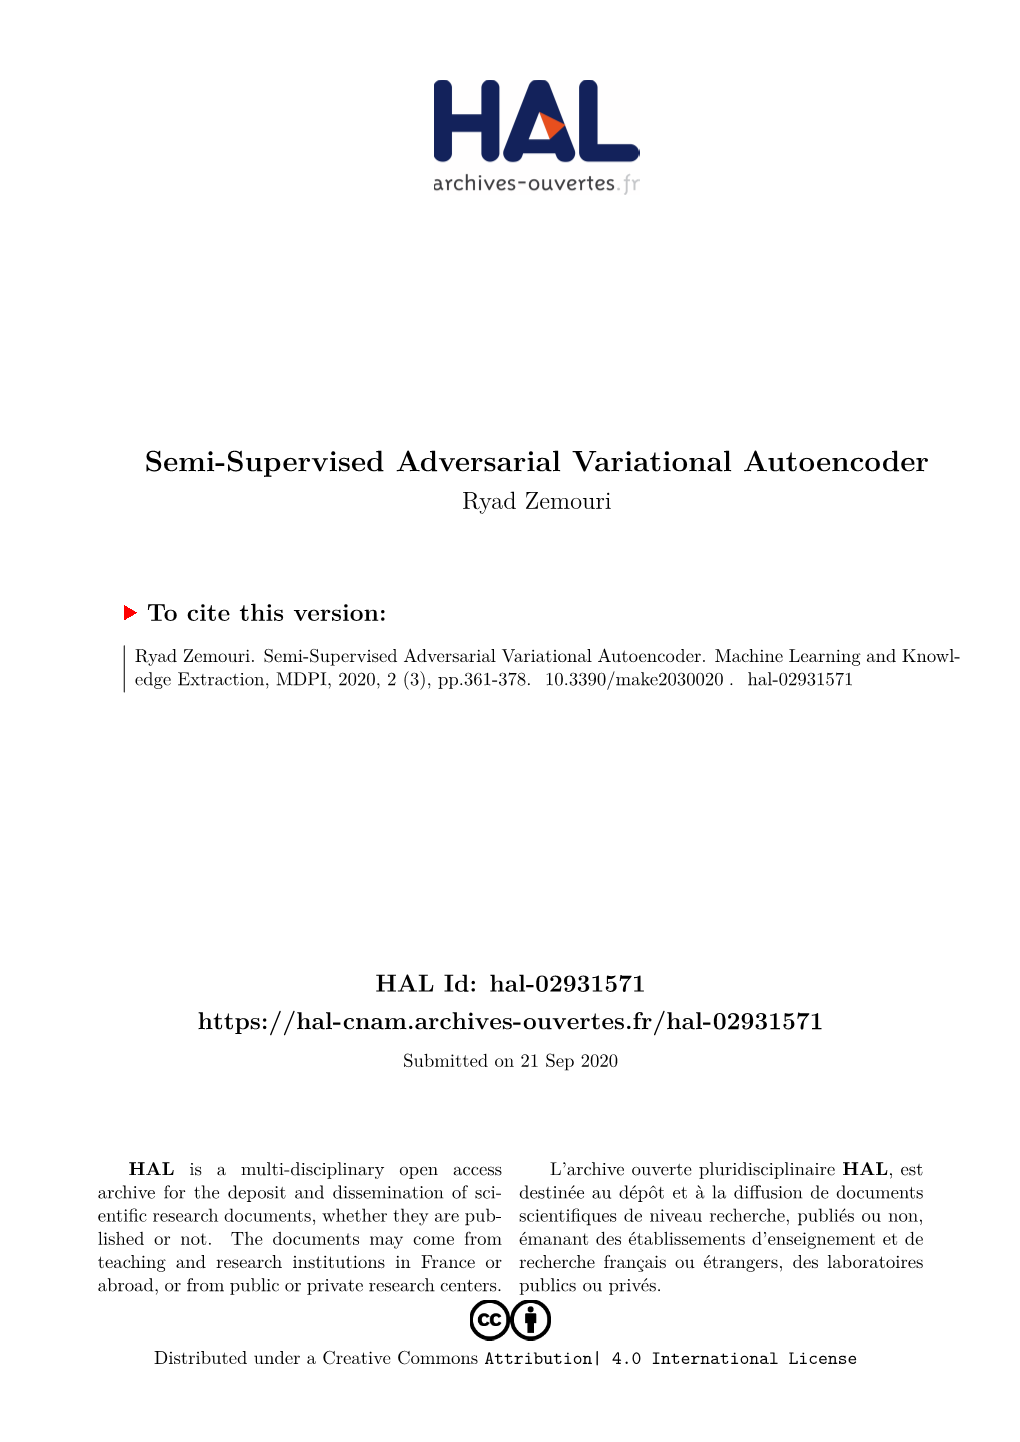 Semi-Supervised Adversarial Variational Autoencoder Ryad Zemouri